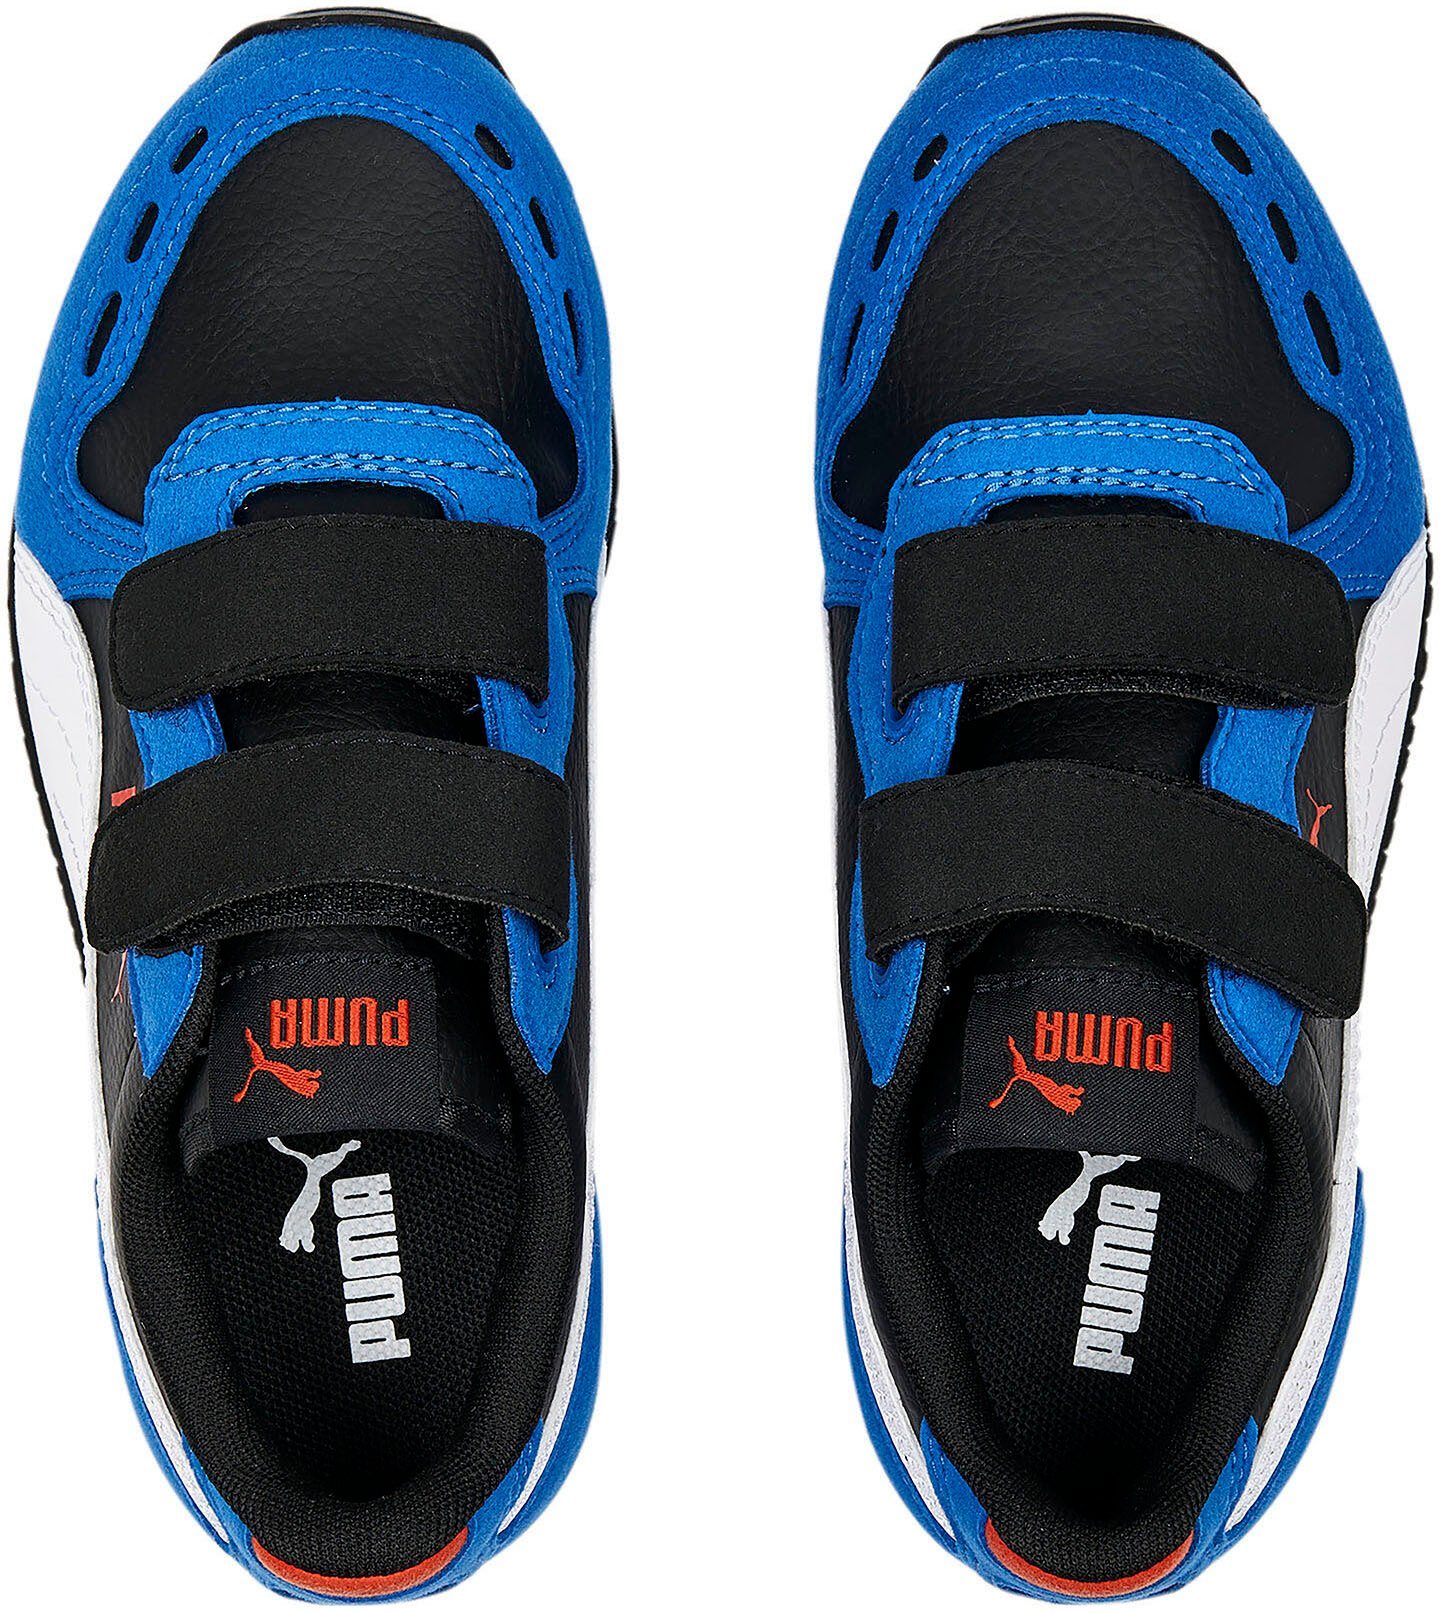 SL V PUMA Blue mit PS 20 Klettverschluss RACER CABANA PUMA Black-PUMA White-Victoria Sneaker